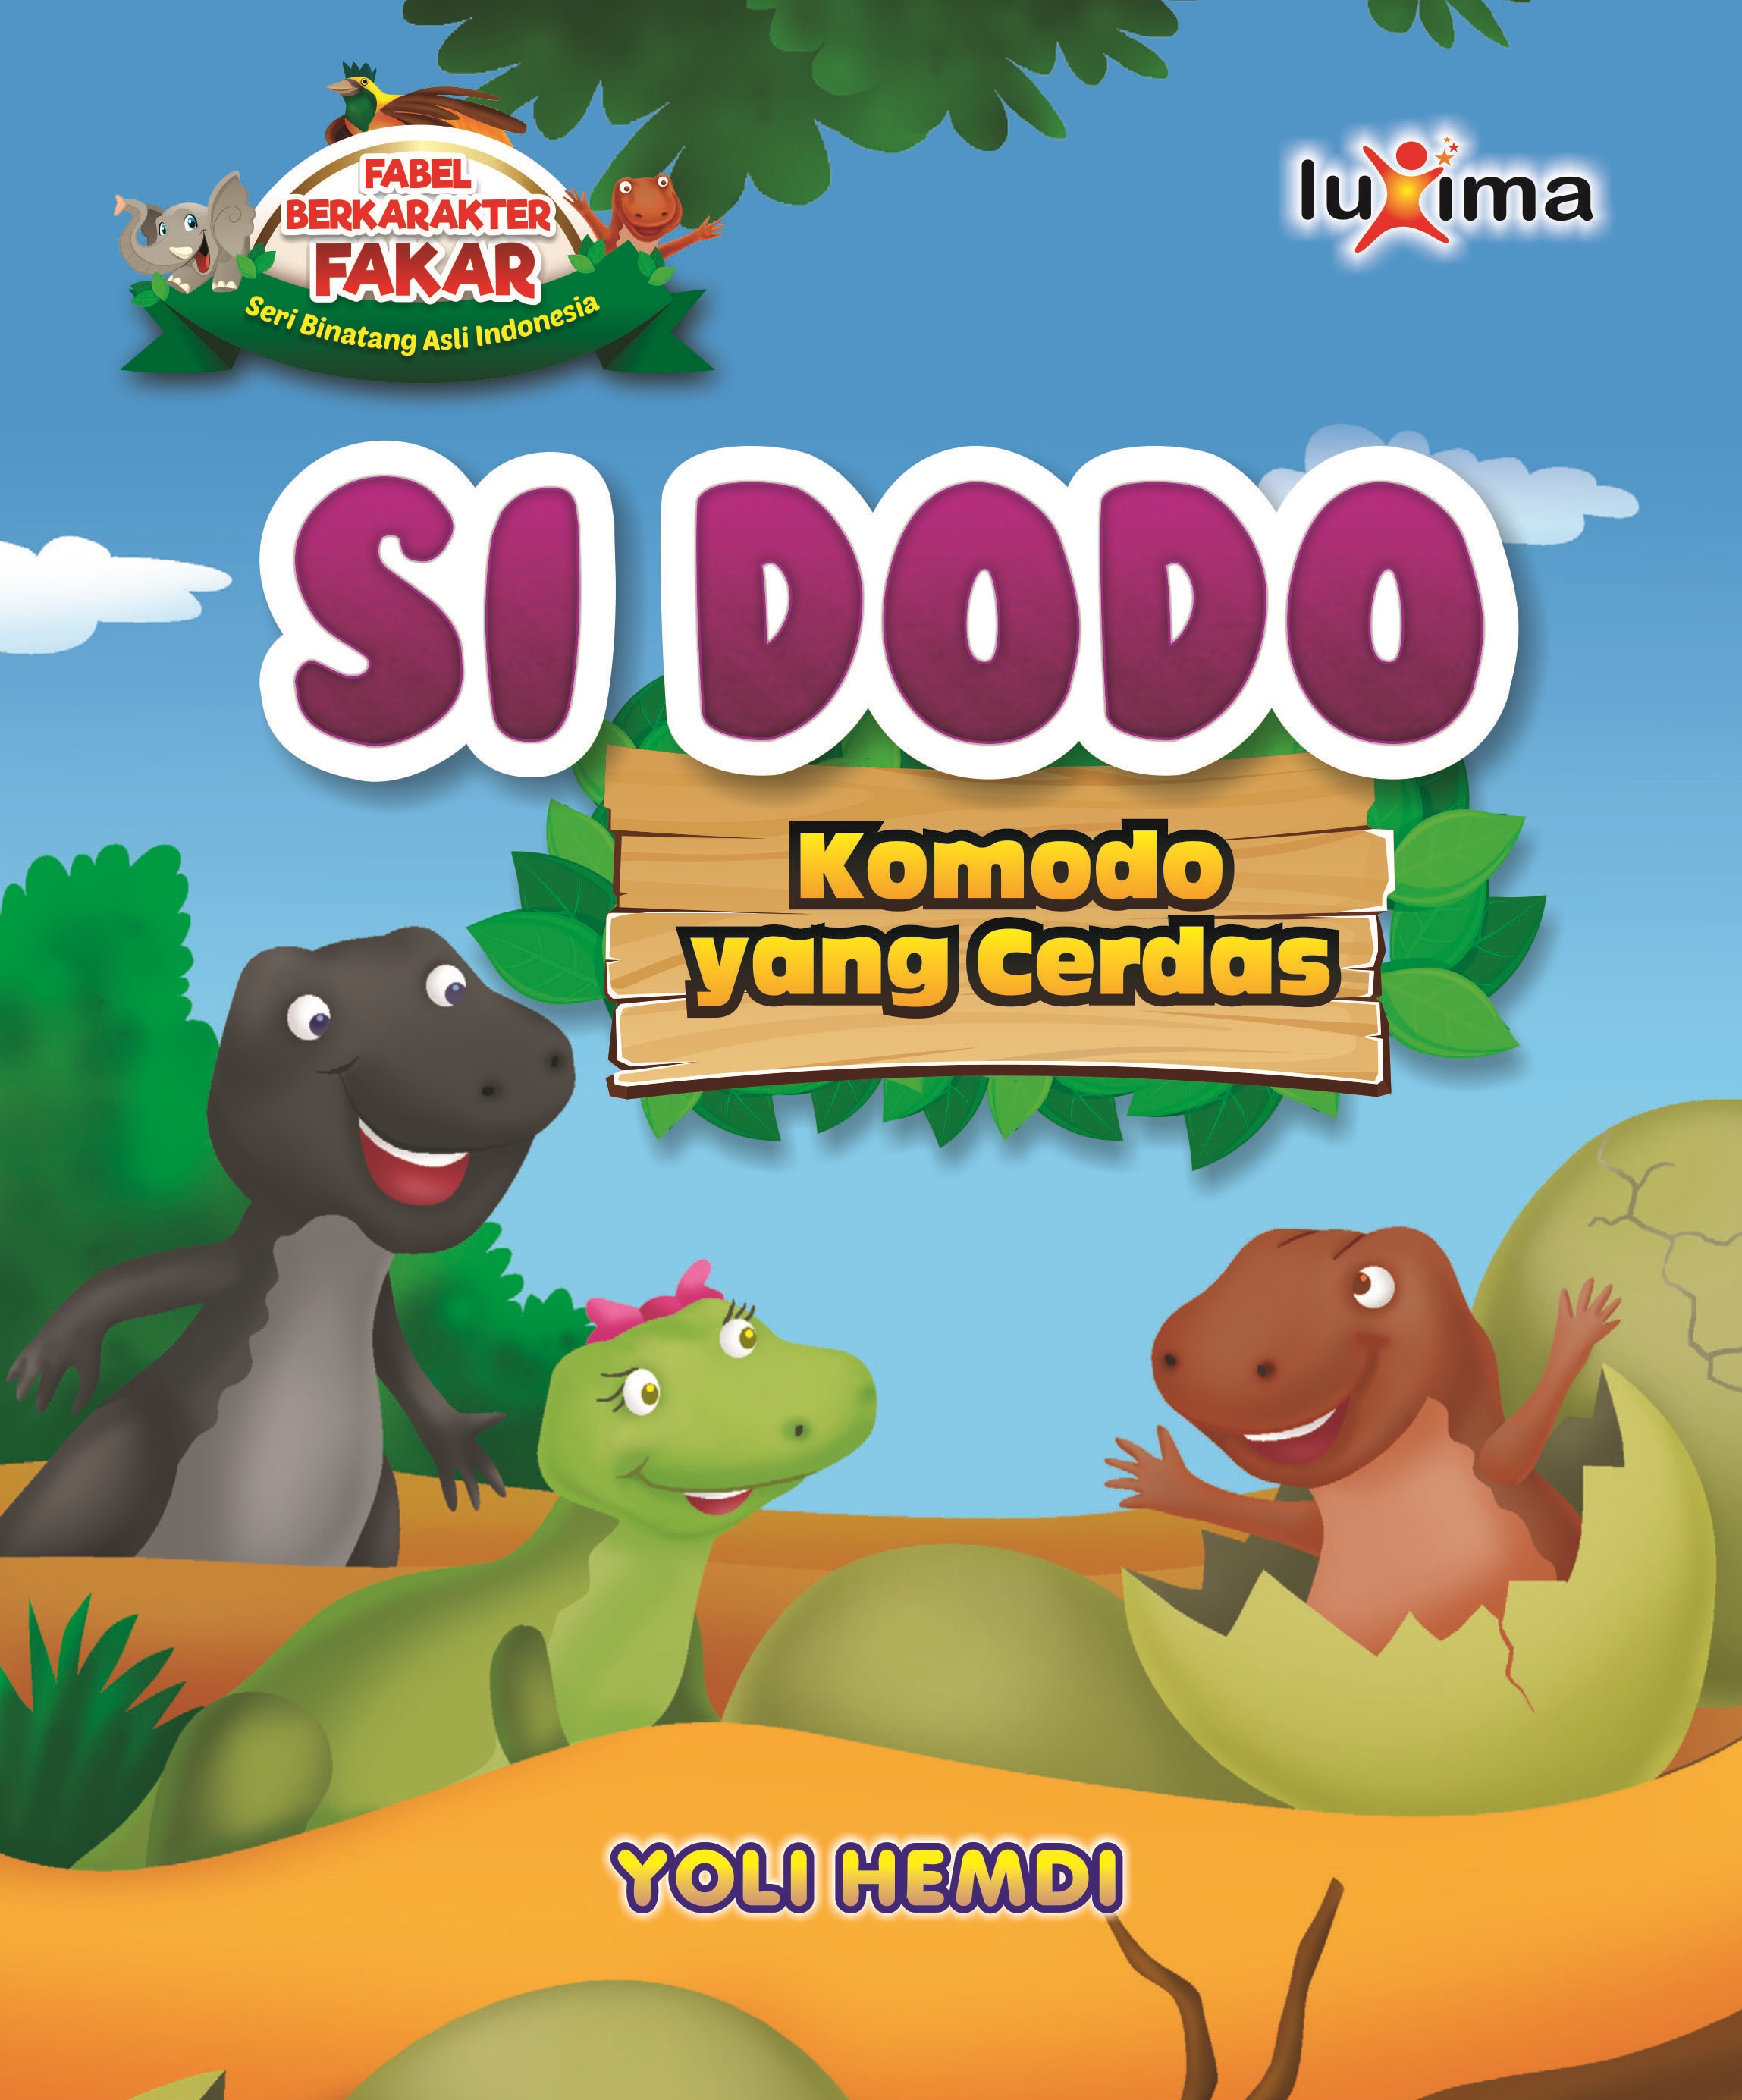 Si Dodo: Komodo yang cerdas [sumber elektronis]